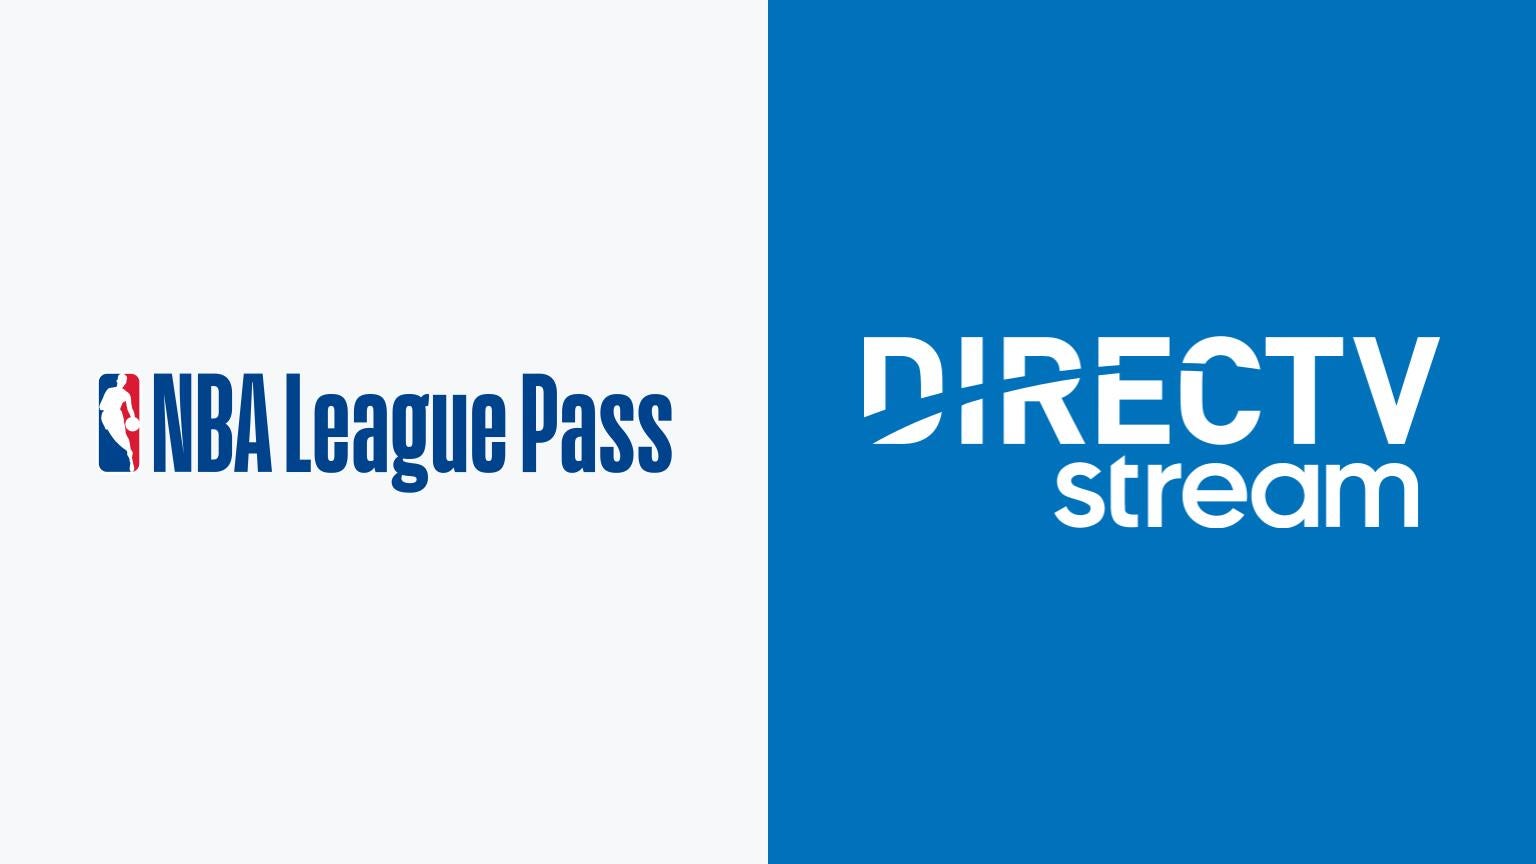 directv stream nba league pass